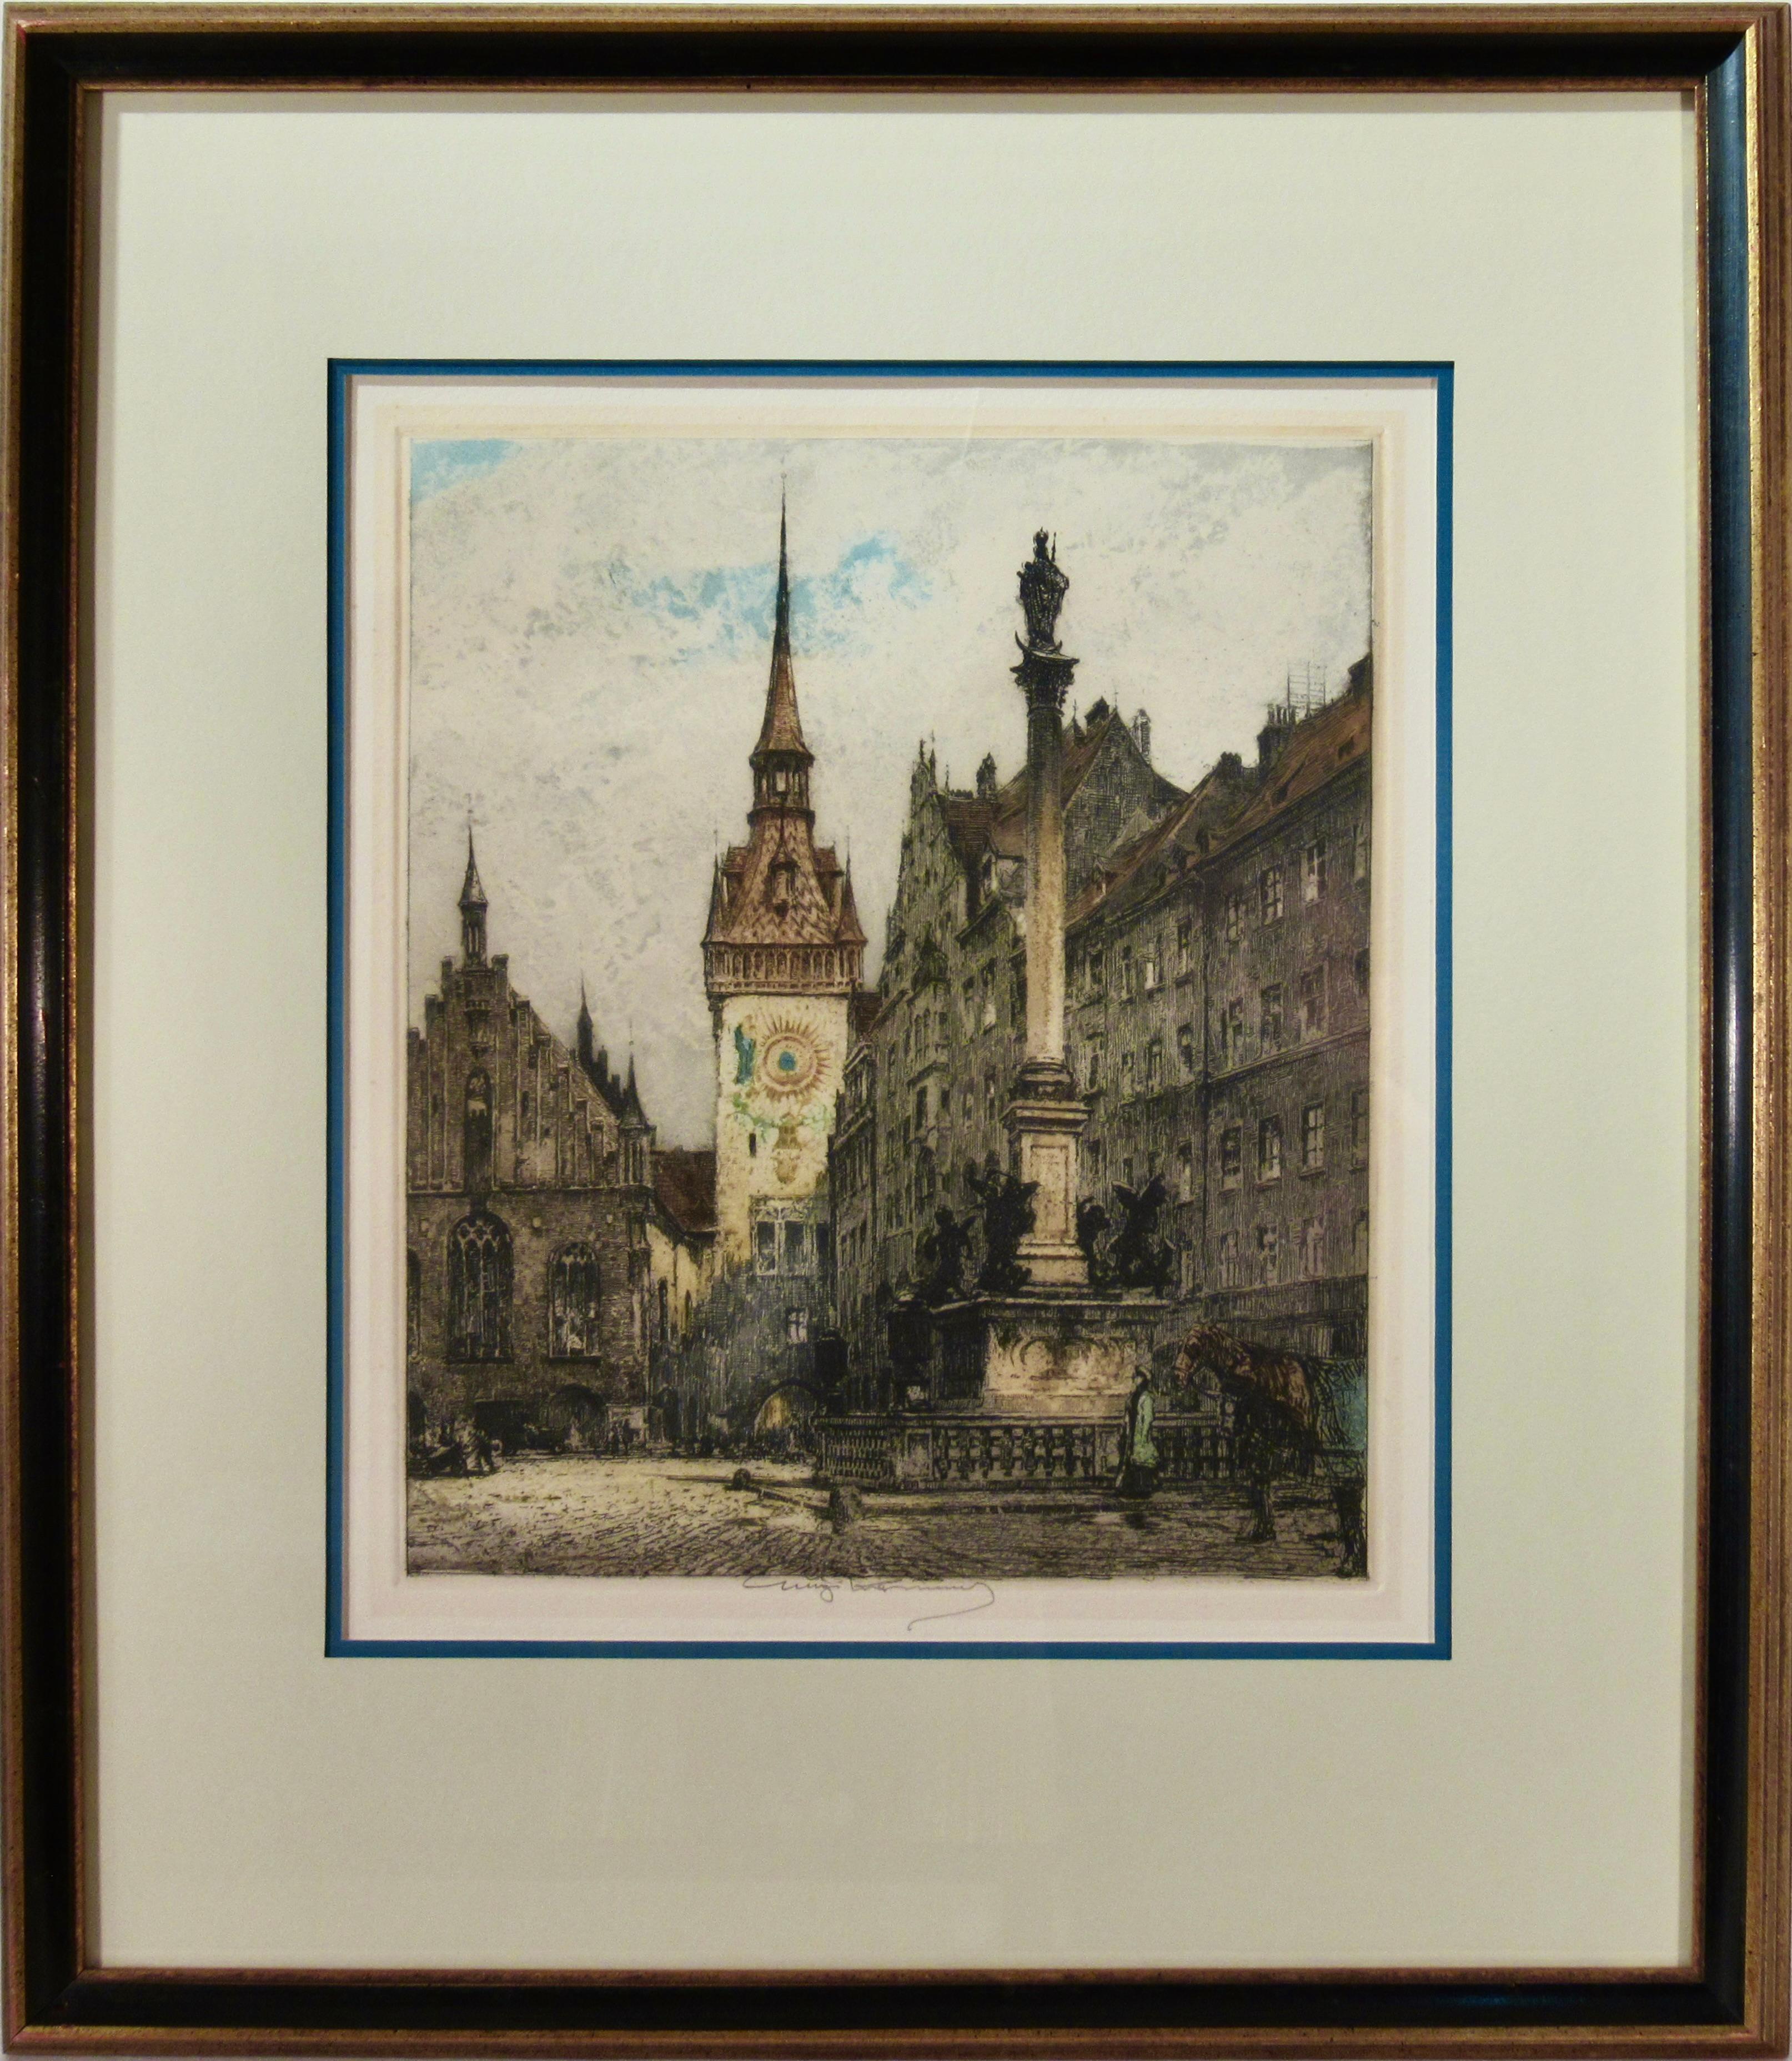 Luigi Kasimir Figurative Print - The Old City Hall, Munich, Germany